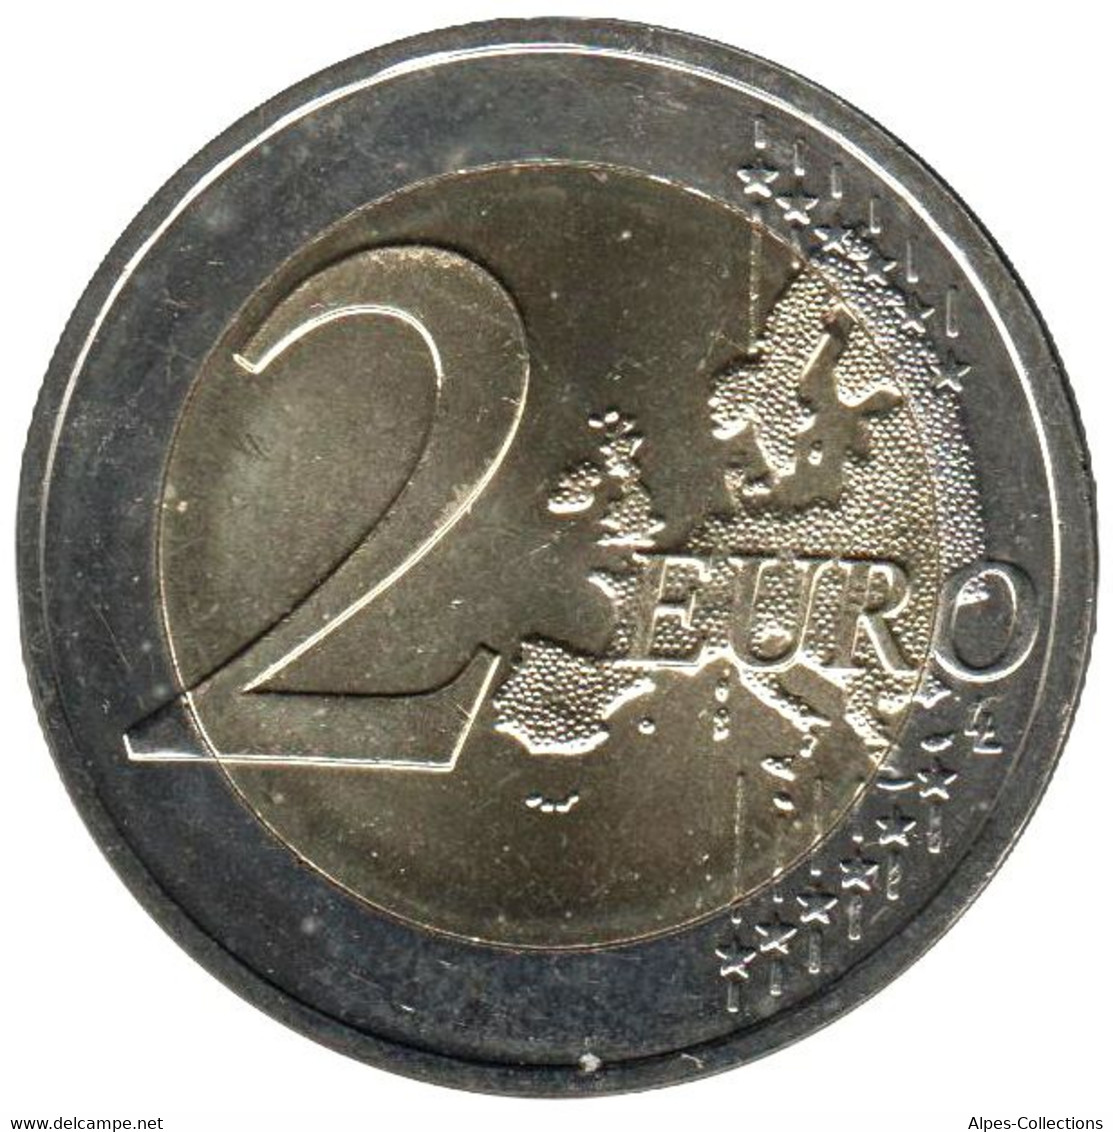 LI20019.1 - LITUANIE - 2 Euros Comm. Les Sutartines Chansons Lituaniennes - 2019 - Litouwen